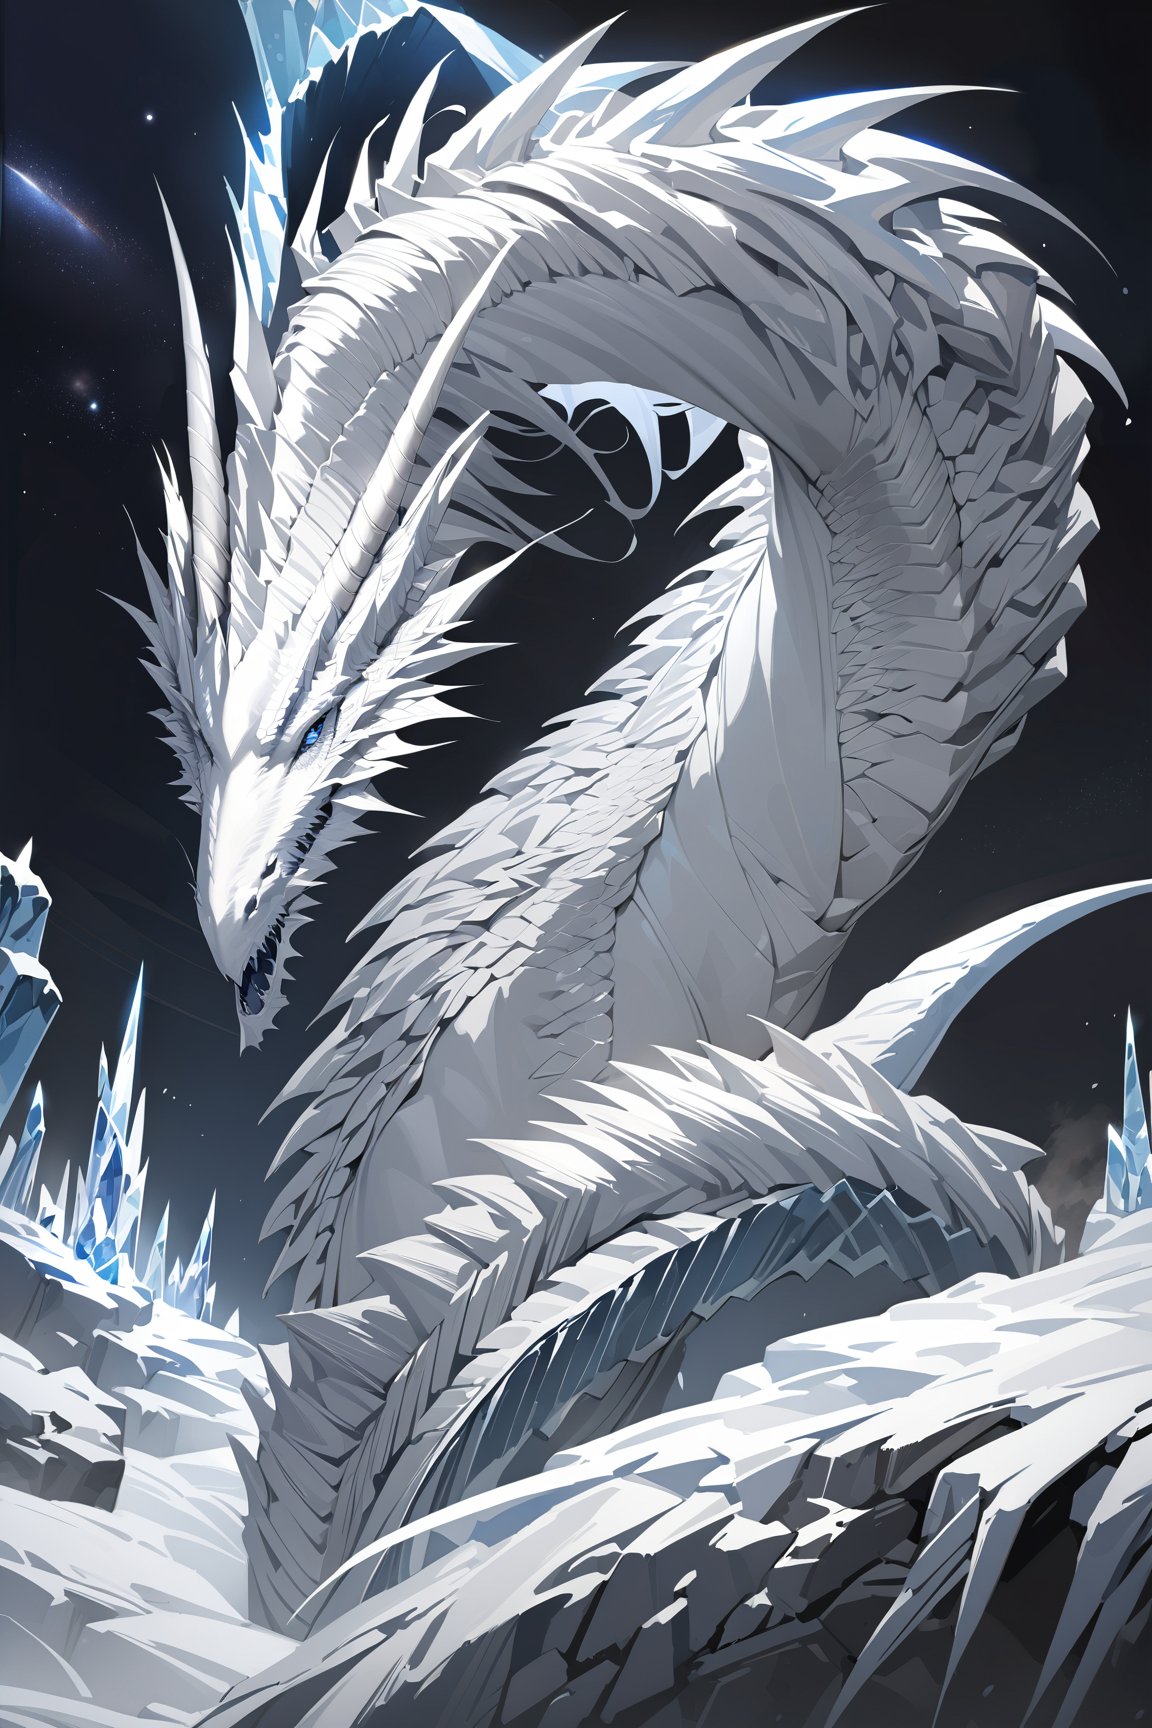 mechanical white dragon,
starry sky,night,ice world,
masterpiece, best quality,photorealistic,white dragon